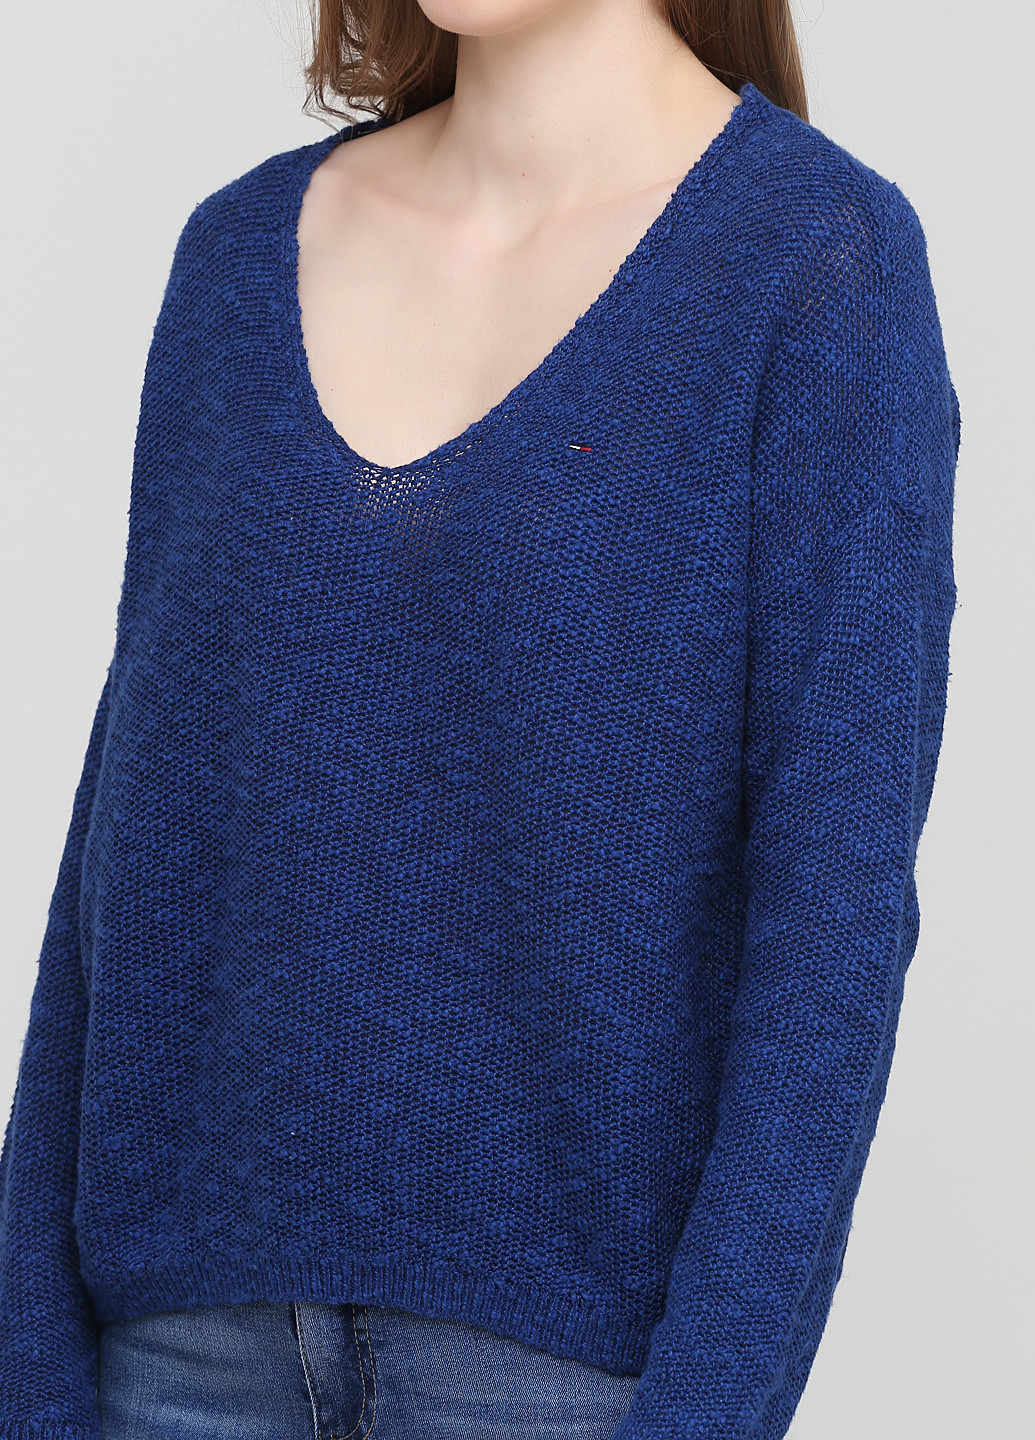 Синий демисезонный пуловер пуловер Tommy Hilfiger